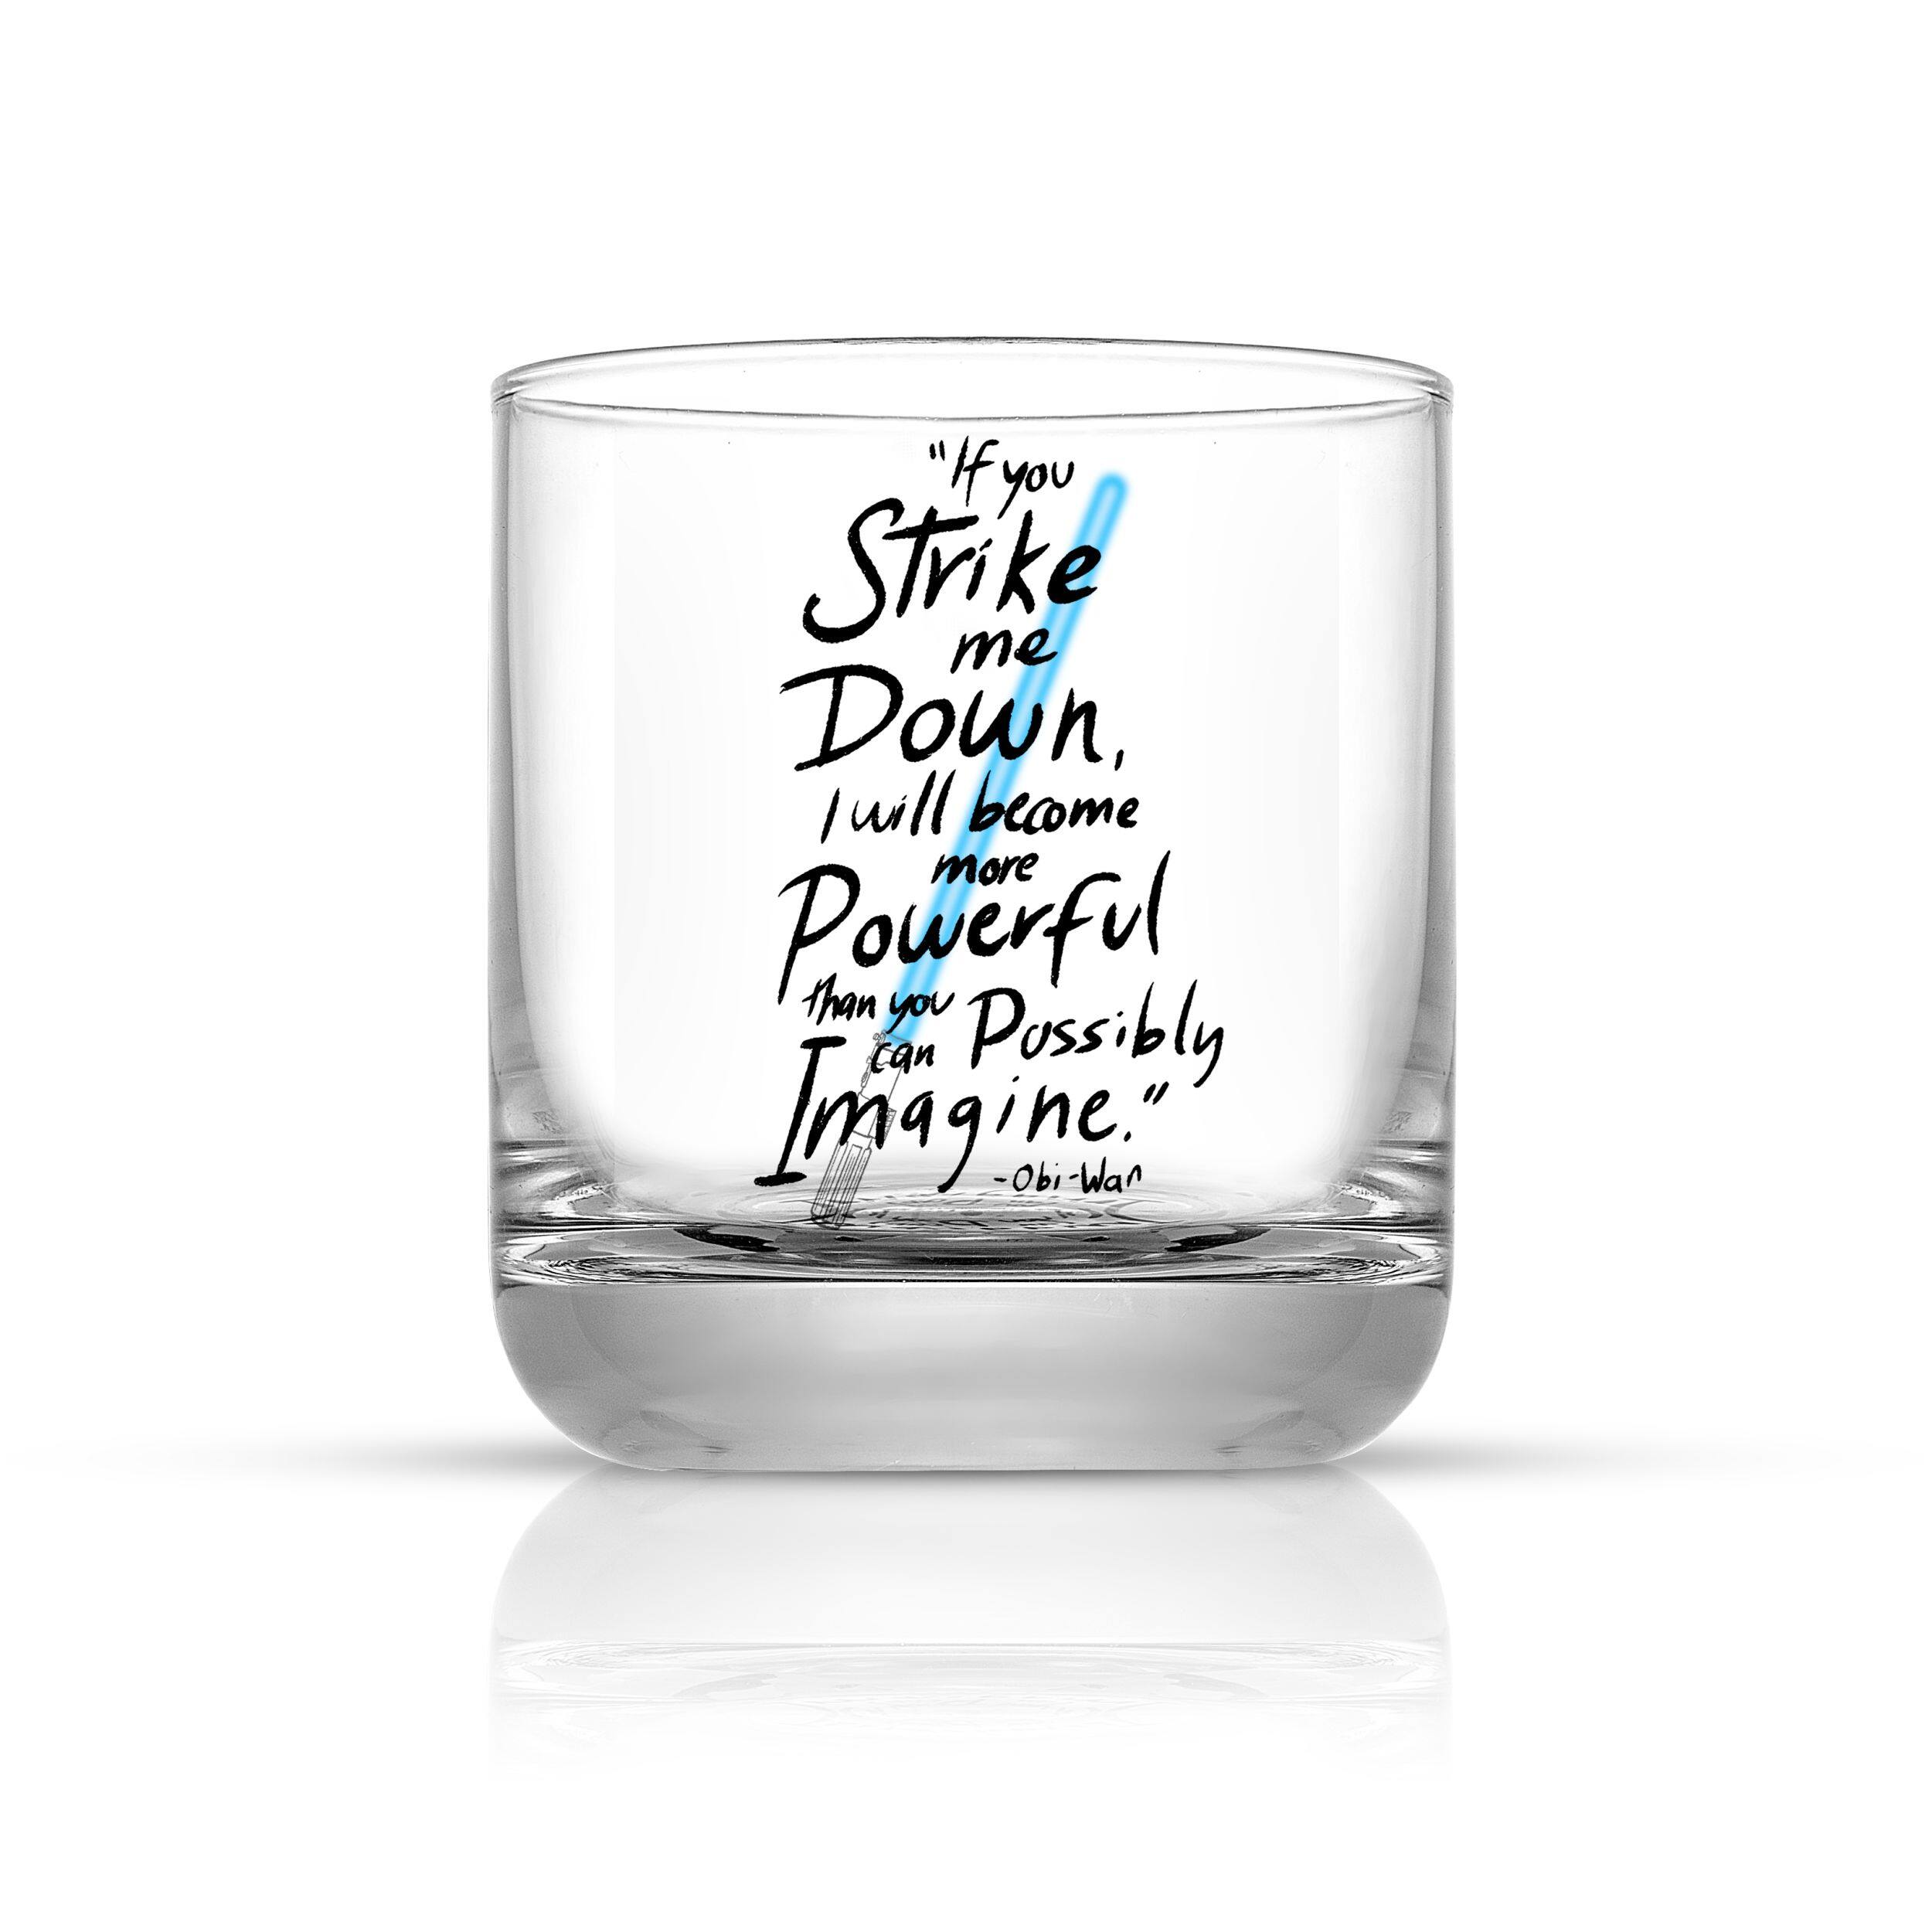 JoyJolt&#xAE; Star Wars&#x2122; 10oz. New Hope Obi-Wan Kenobi Blue Lightsaber Short Drinking Glass, 2ct.